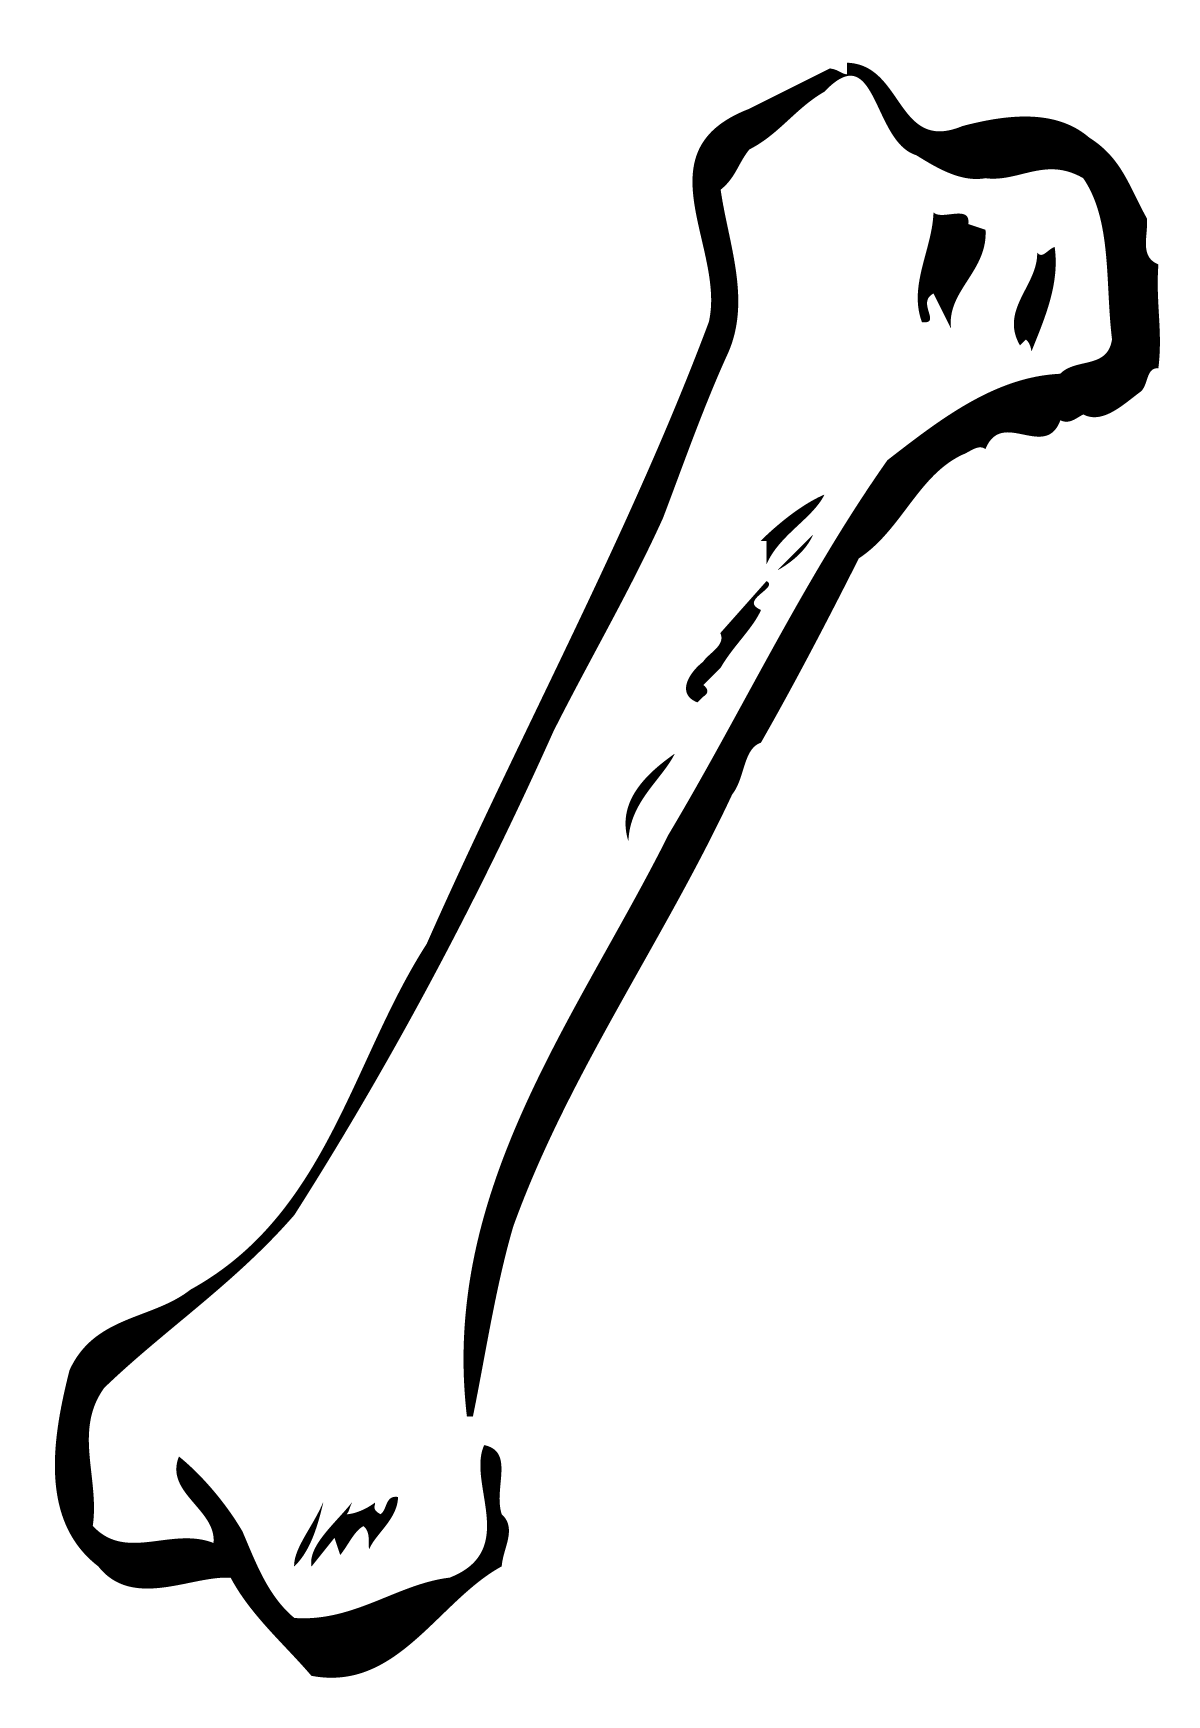 Skeleton clipart arm bone. Dog border panda free